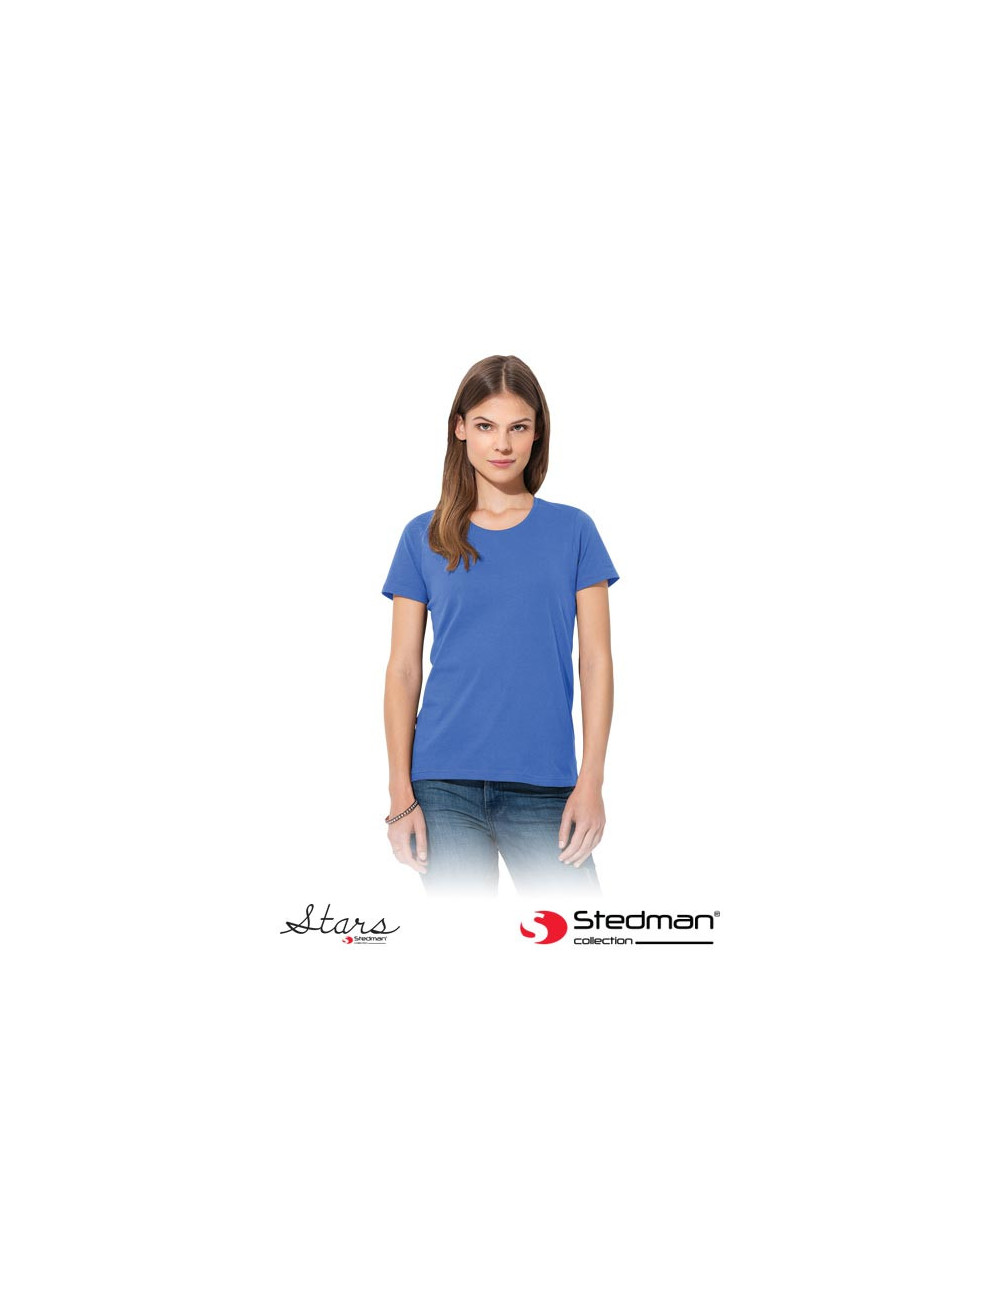 T-shirt women st2600 brr blue Stedman